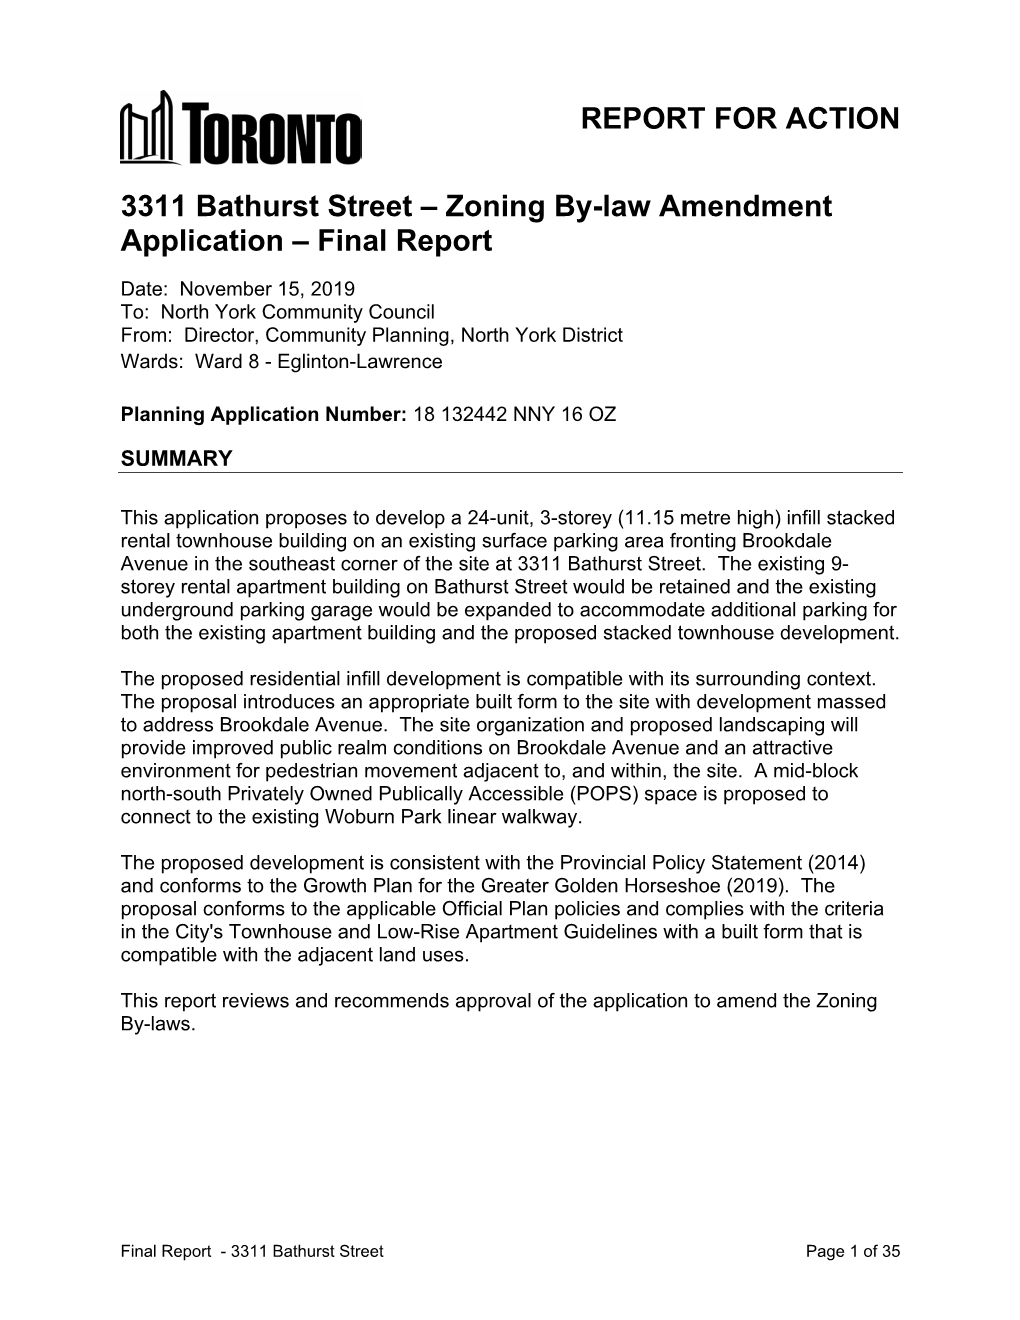 3311 Bathurst Street – Zoning By-Law Amendment Application – Final Report